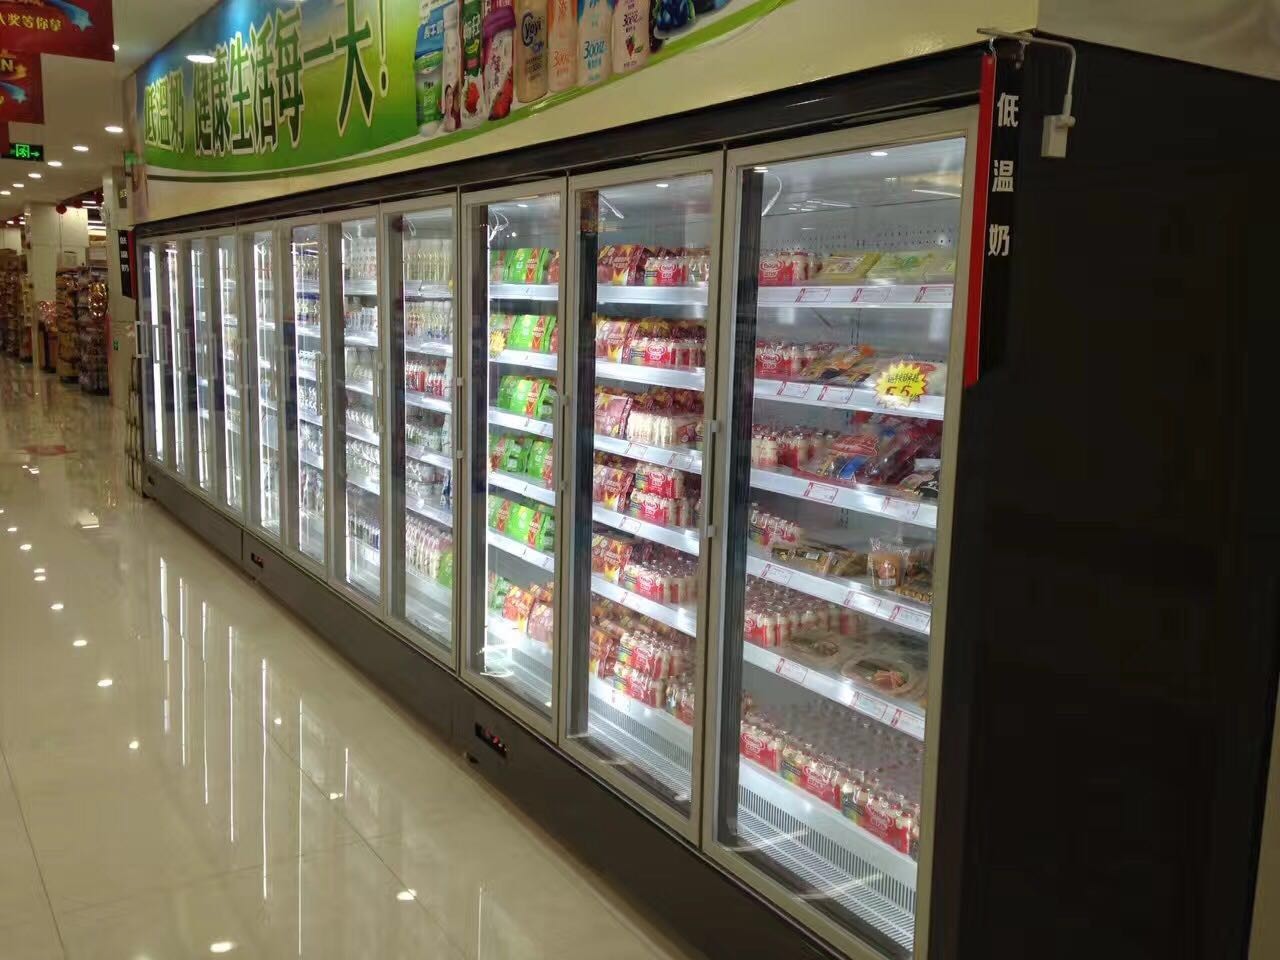 vetrina congelata supermercato bianco di colore dell'esposizione del congelatore del supermercato 5Door